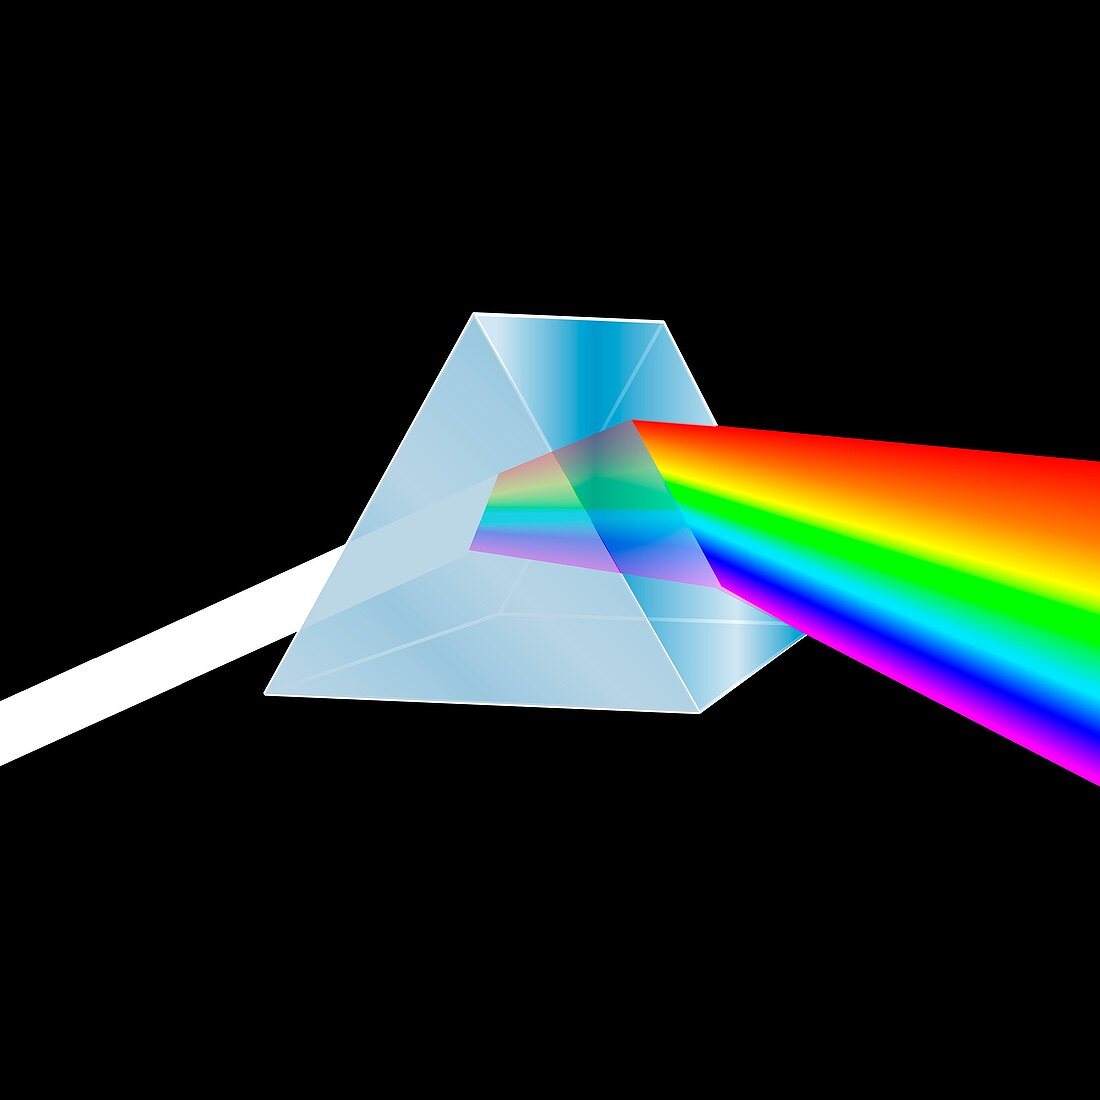 Prism refracting light into a spectrum, illustration